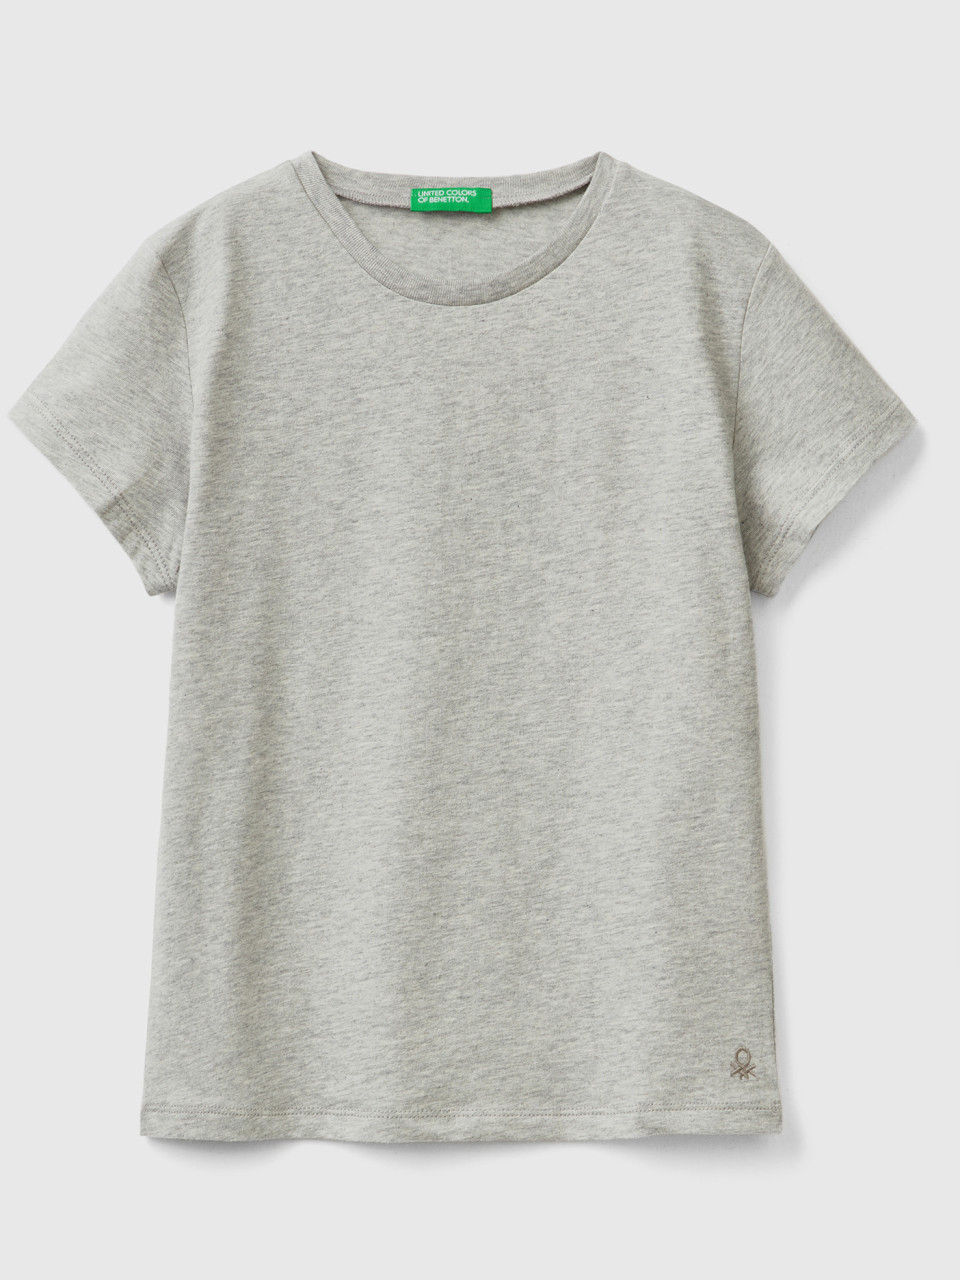 Benetton, T-shirt In Pure Organic Cotton, Light Gray, Kids